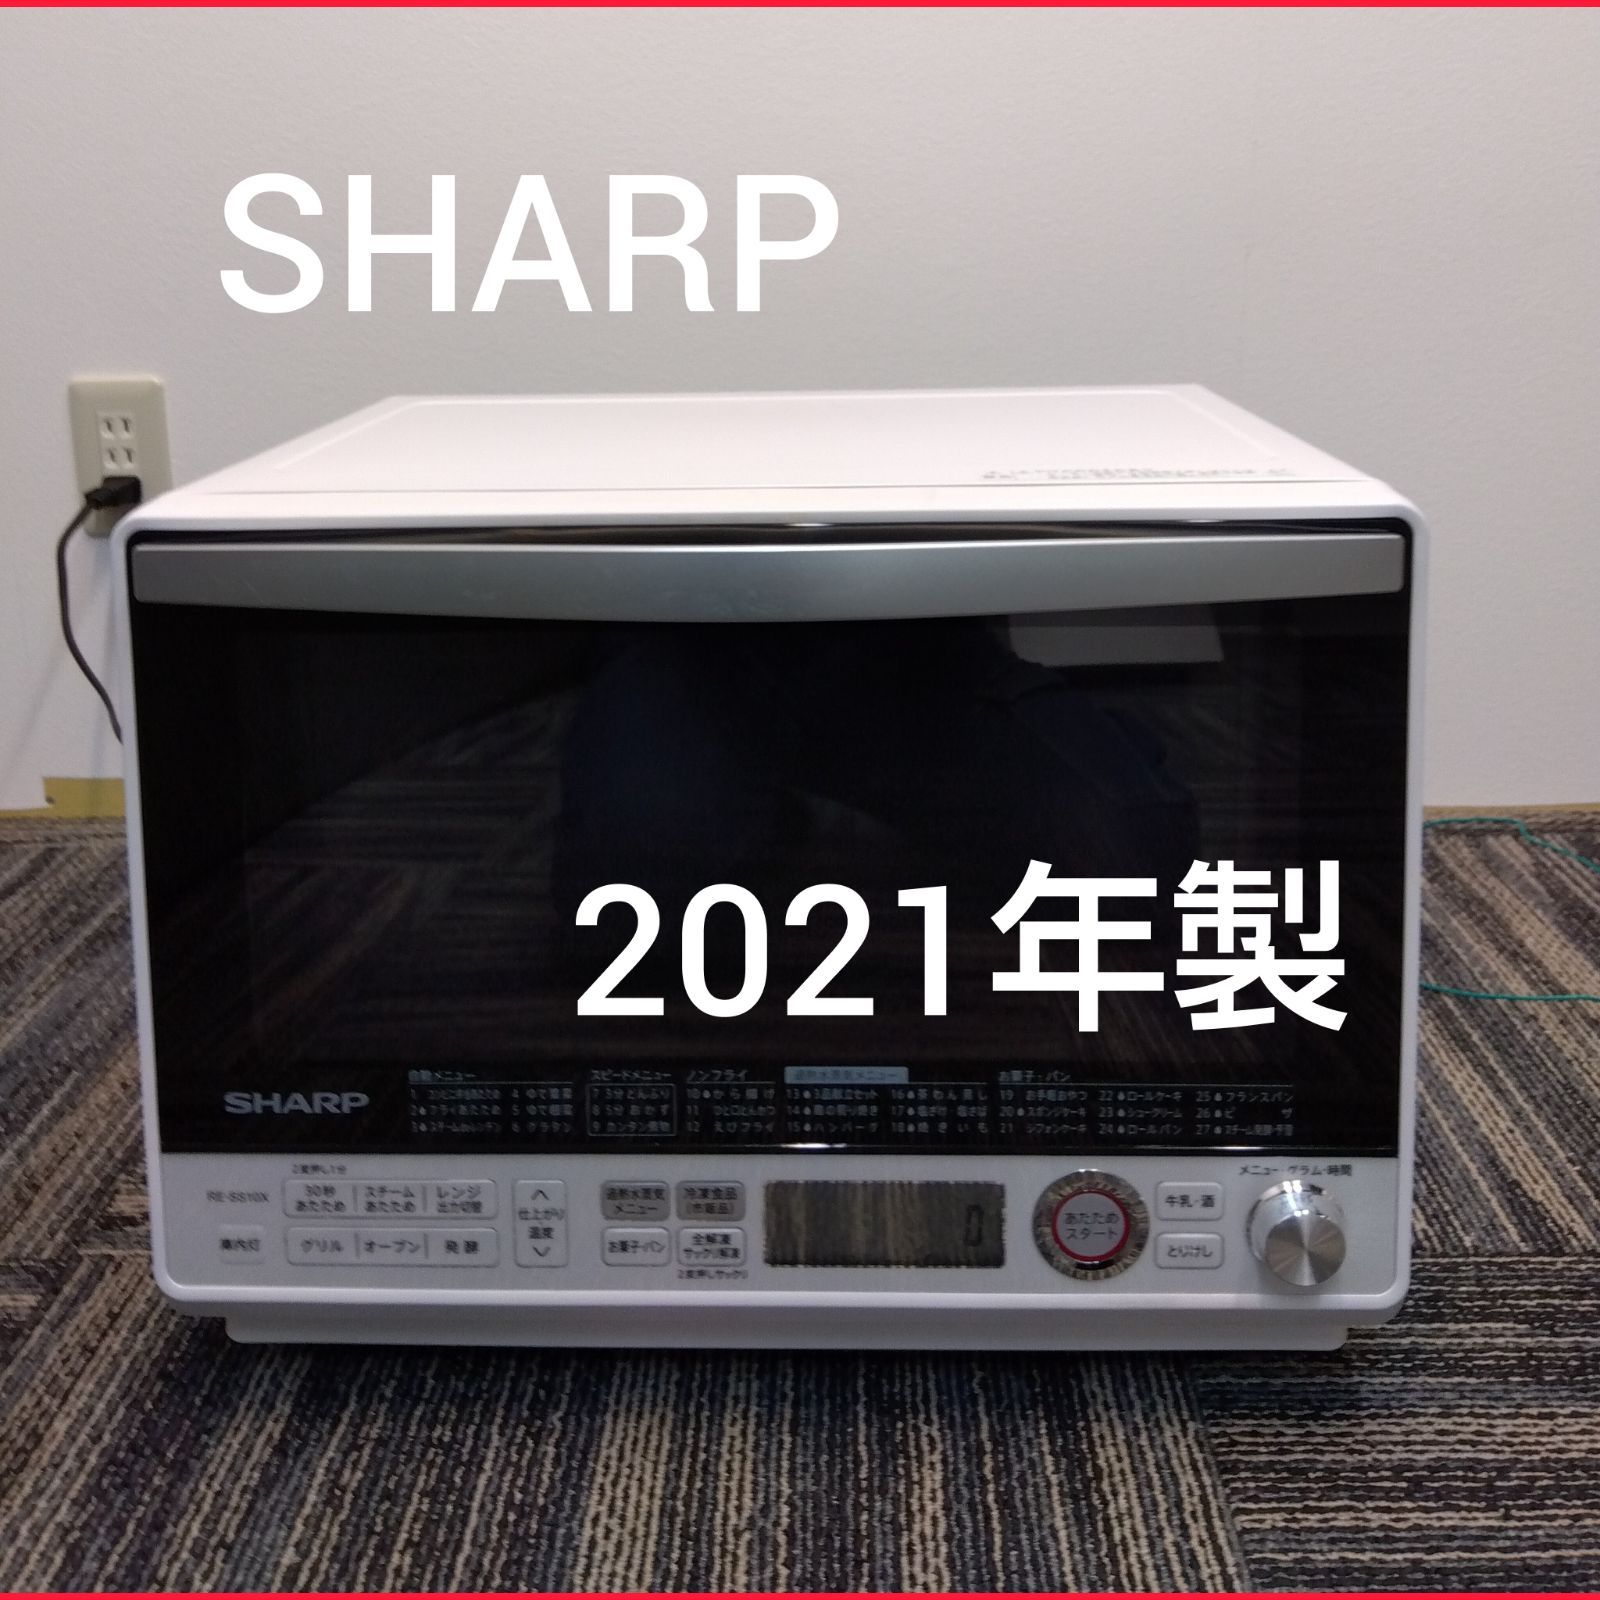 SHARP シャープ オーブンレンジ RE-SS10X- W 2021年製 - メルカリ